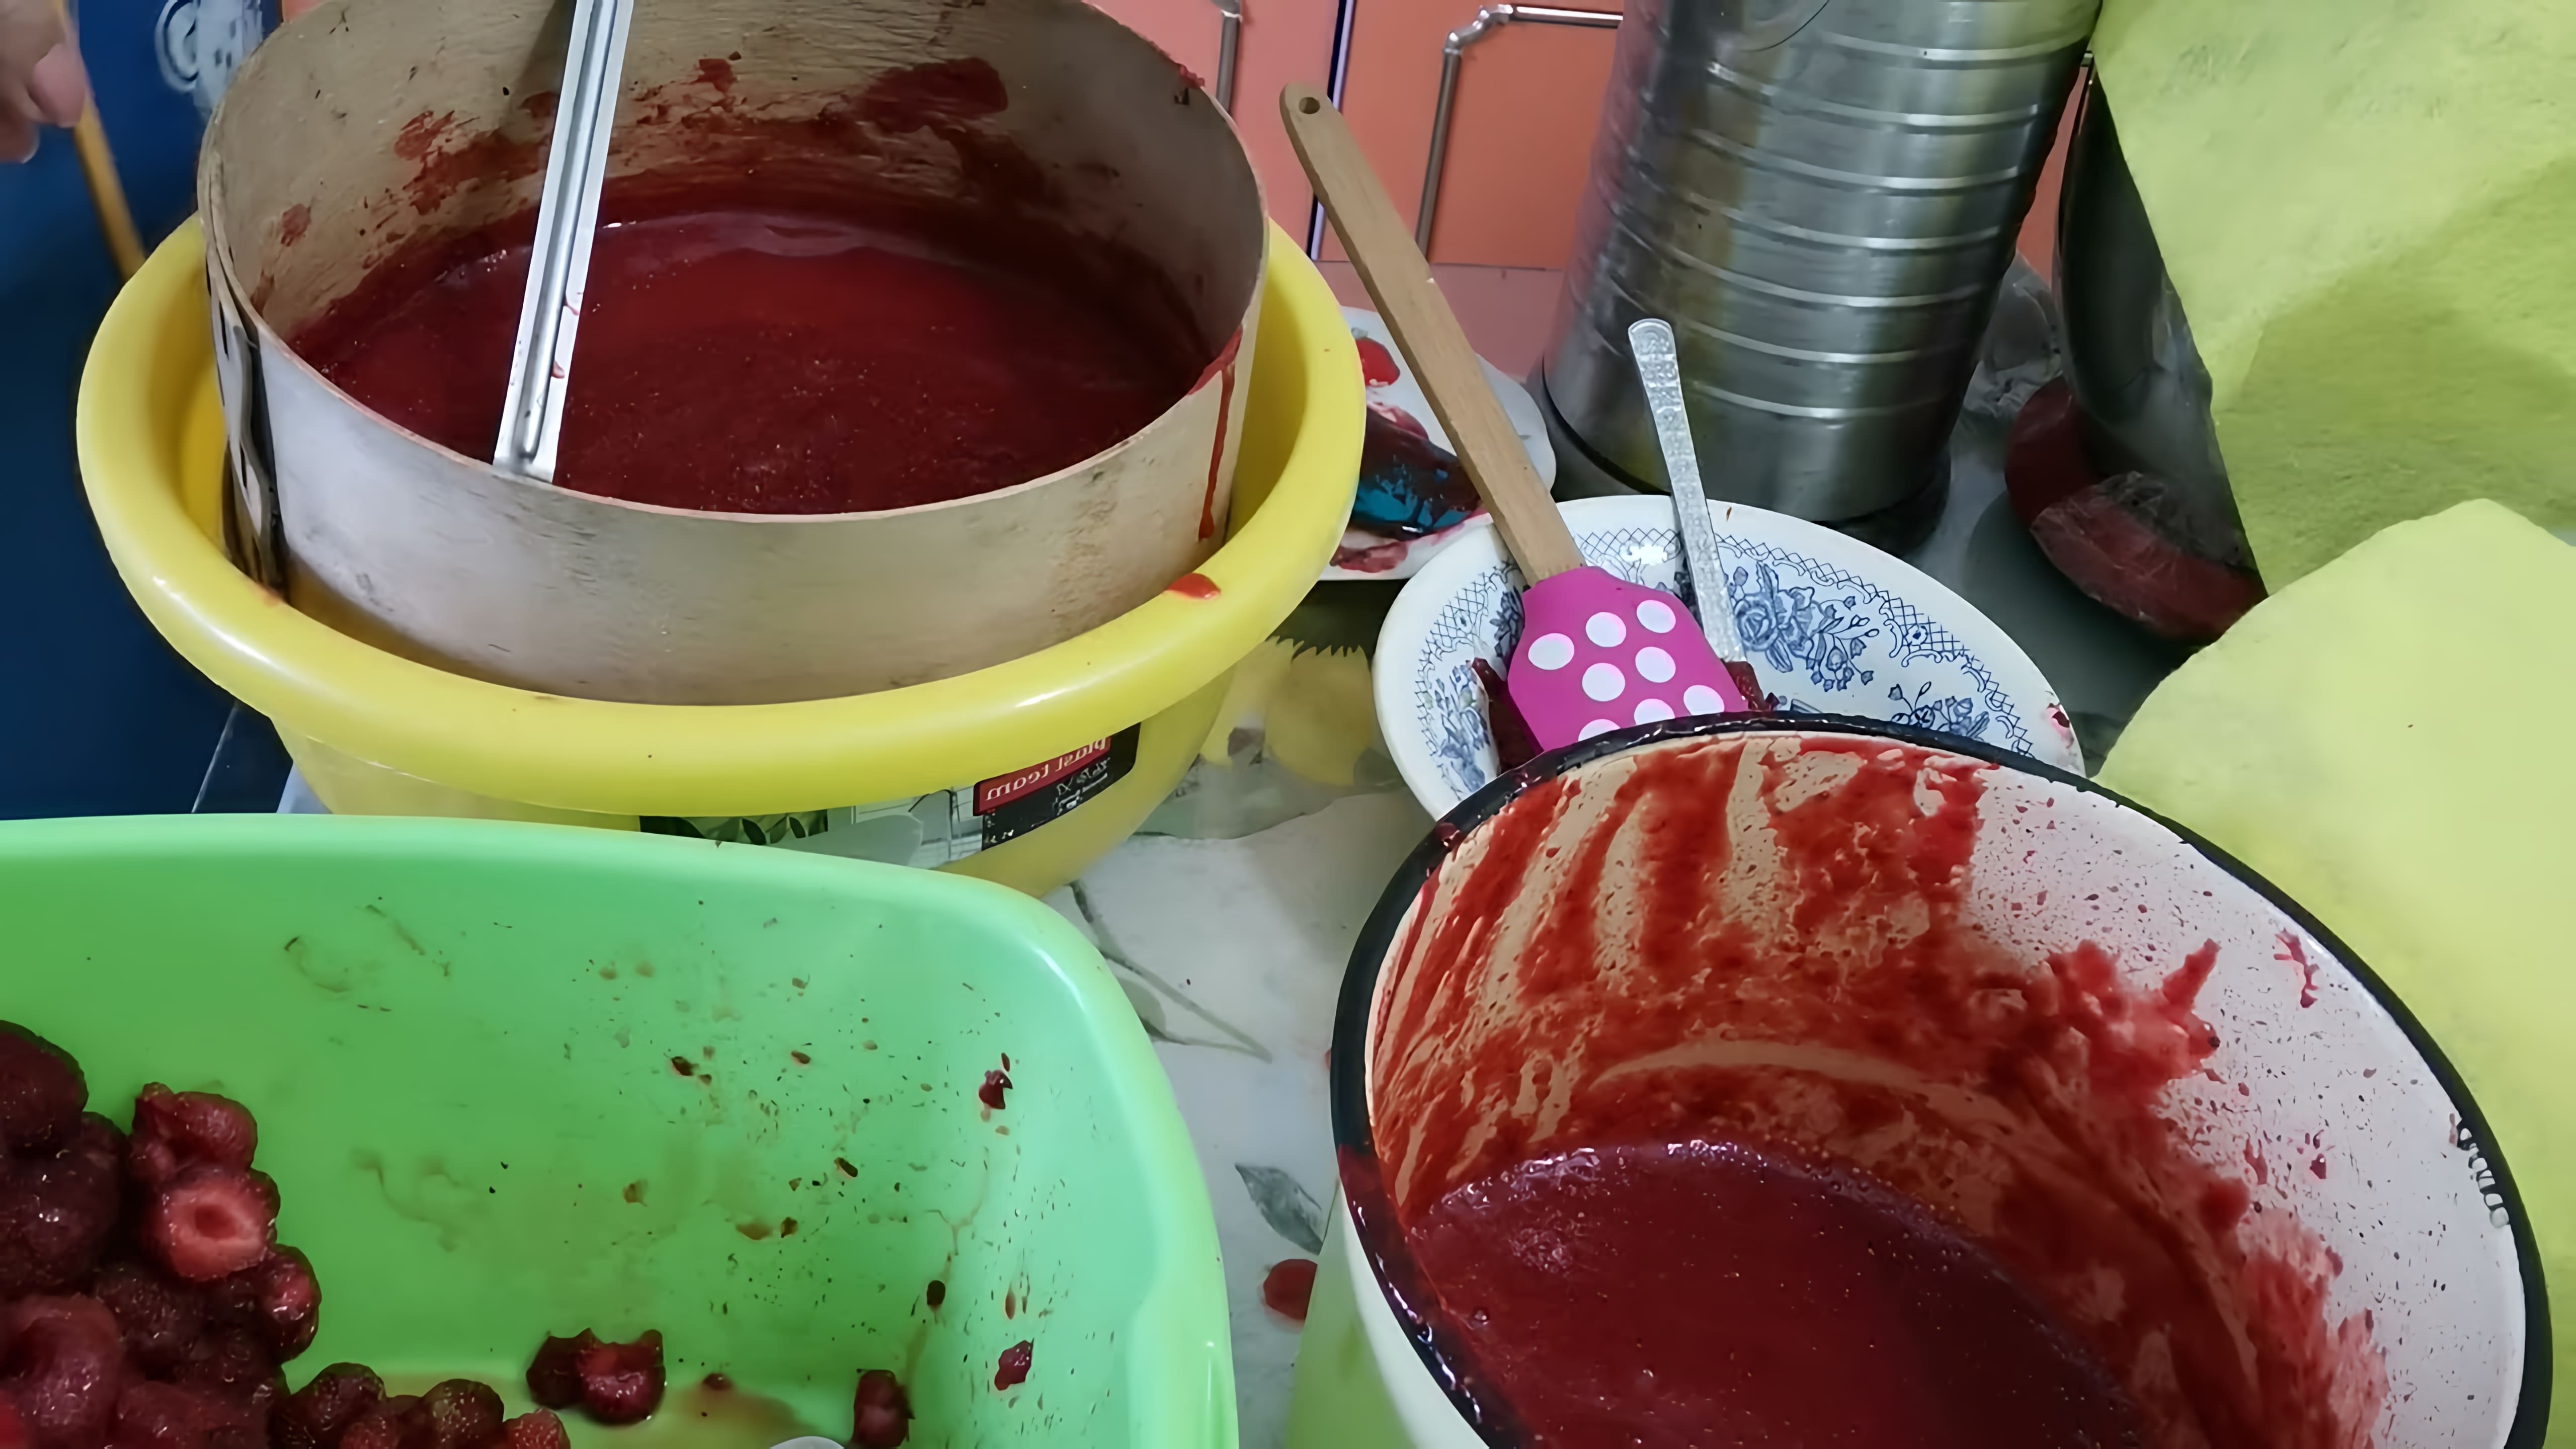 Видео: протёртая клубника без сахара и в морозилку 8июня2022г. #биробиджан #домашняякухня #клубника